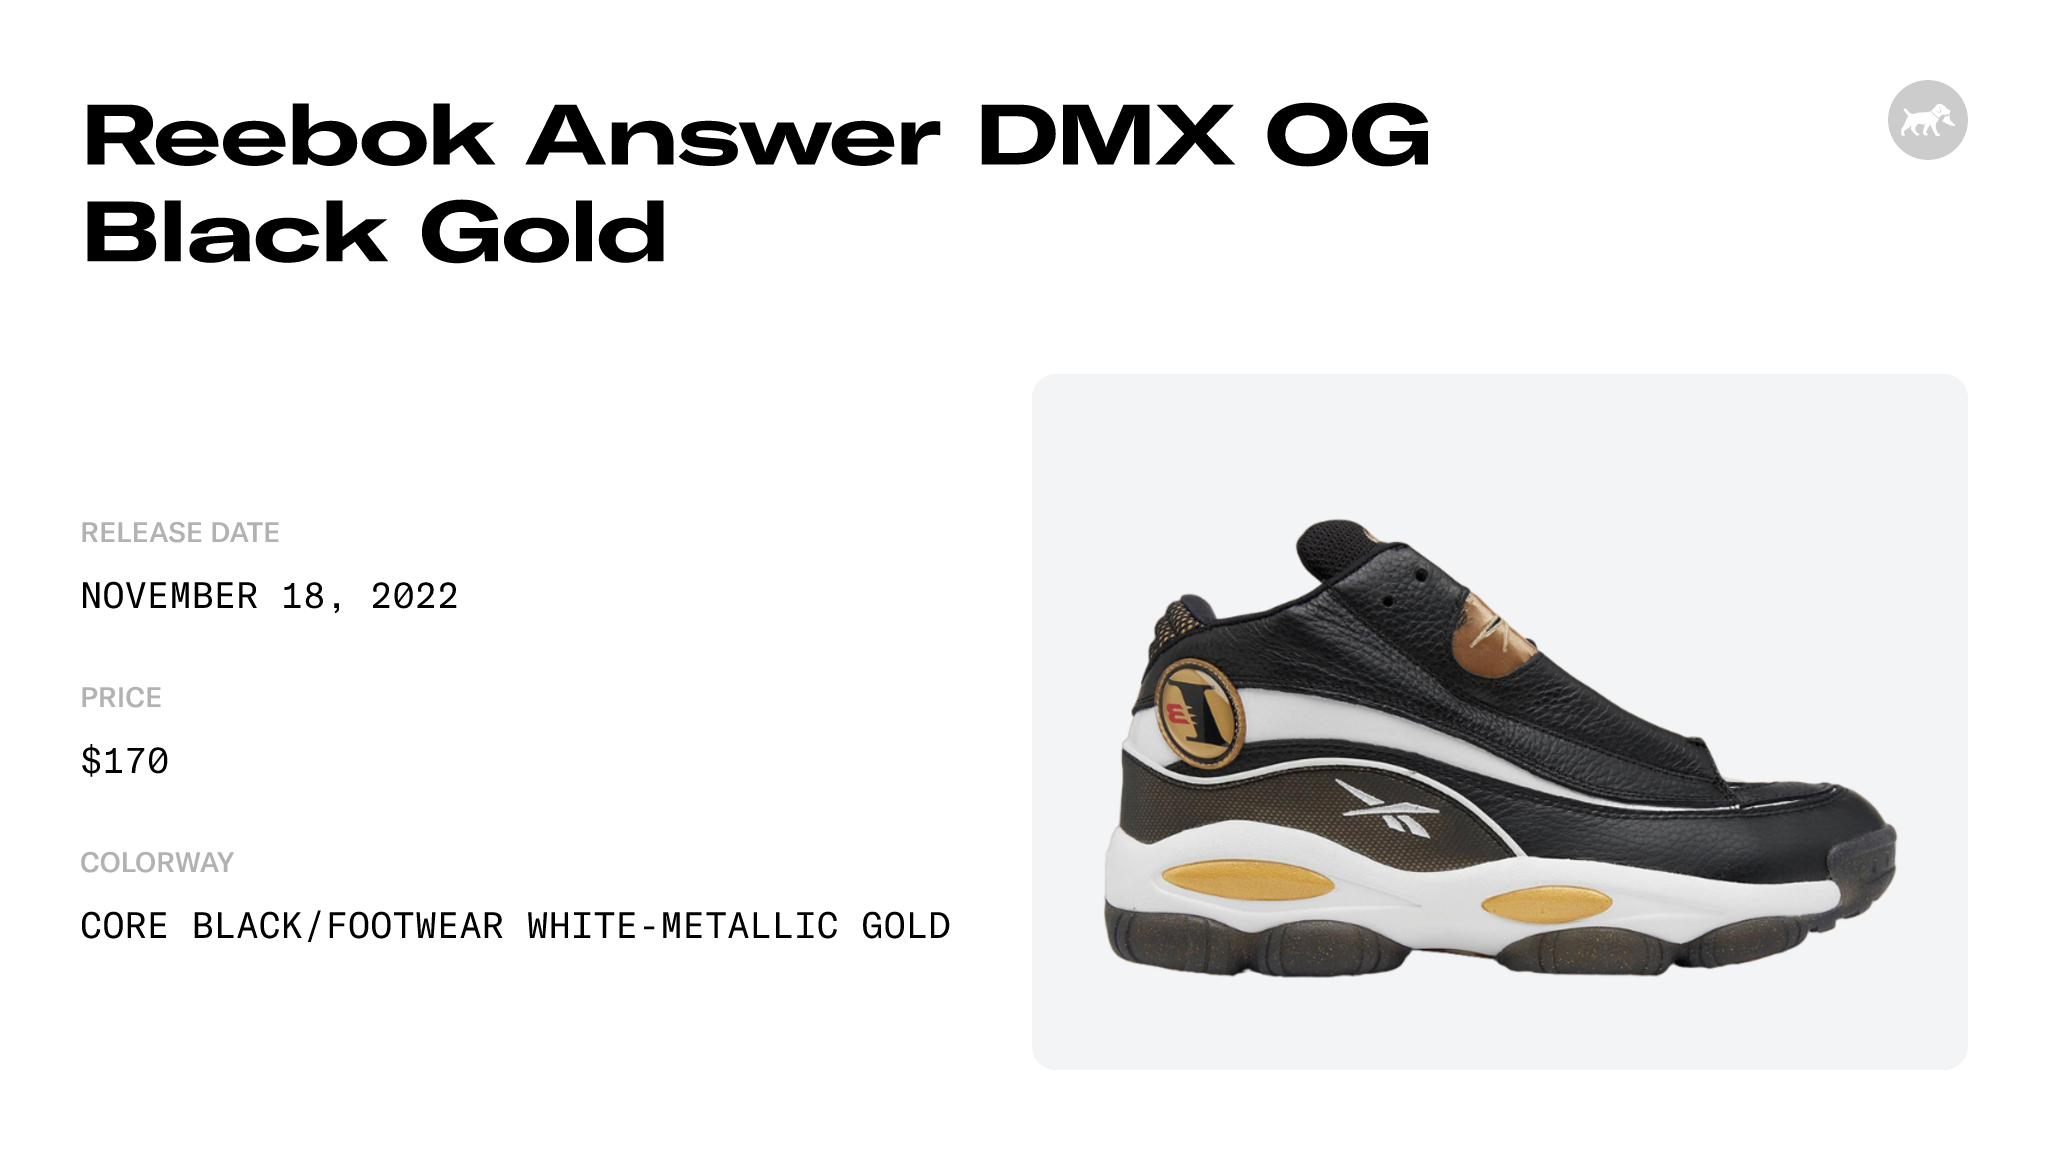 Reebok Answer DMX OG Black Gold - GW6372 Raffles and Release Date